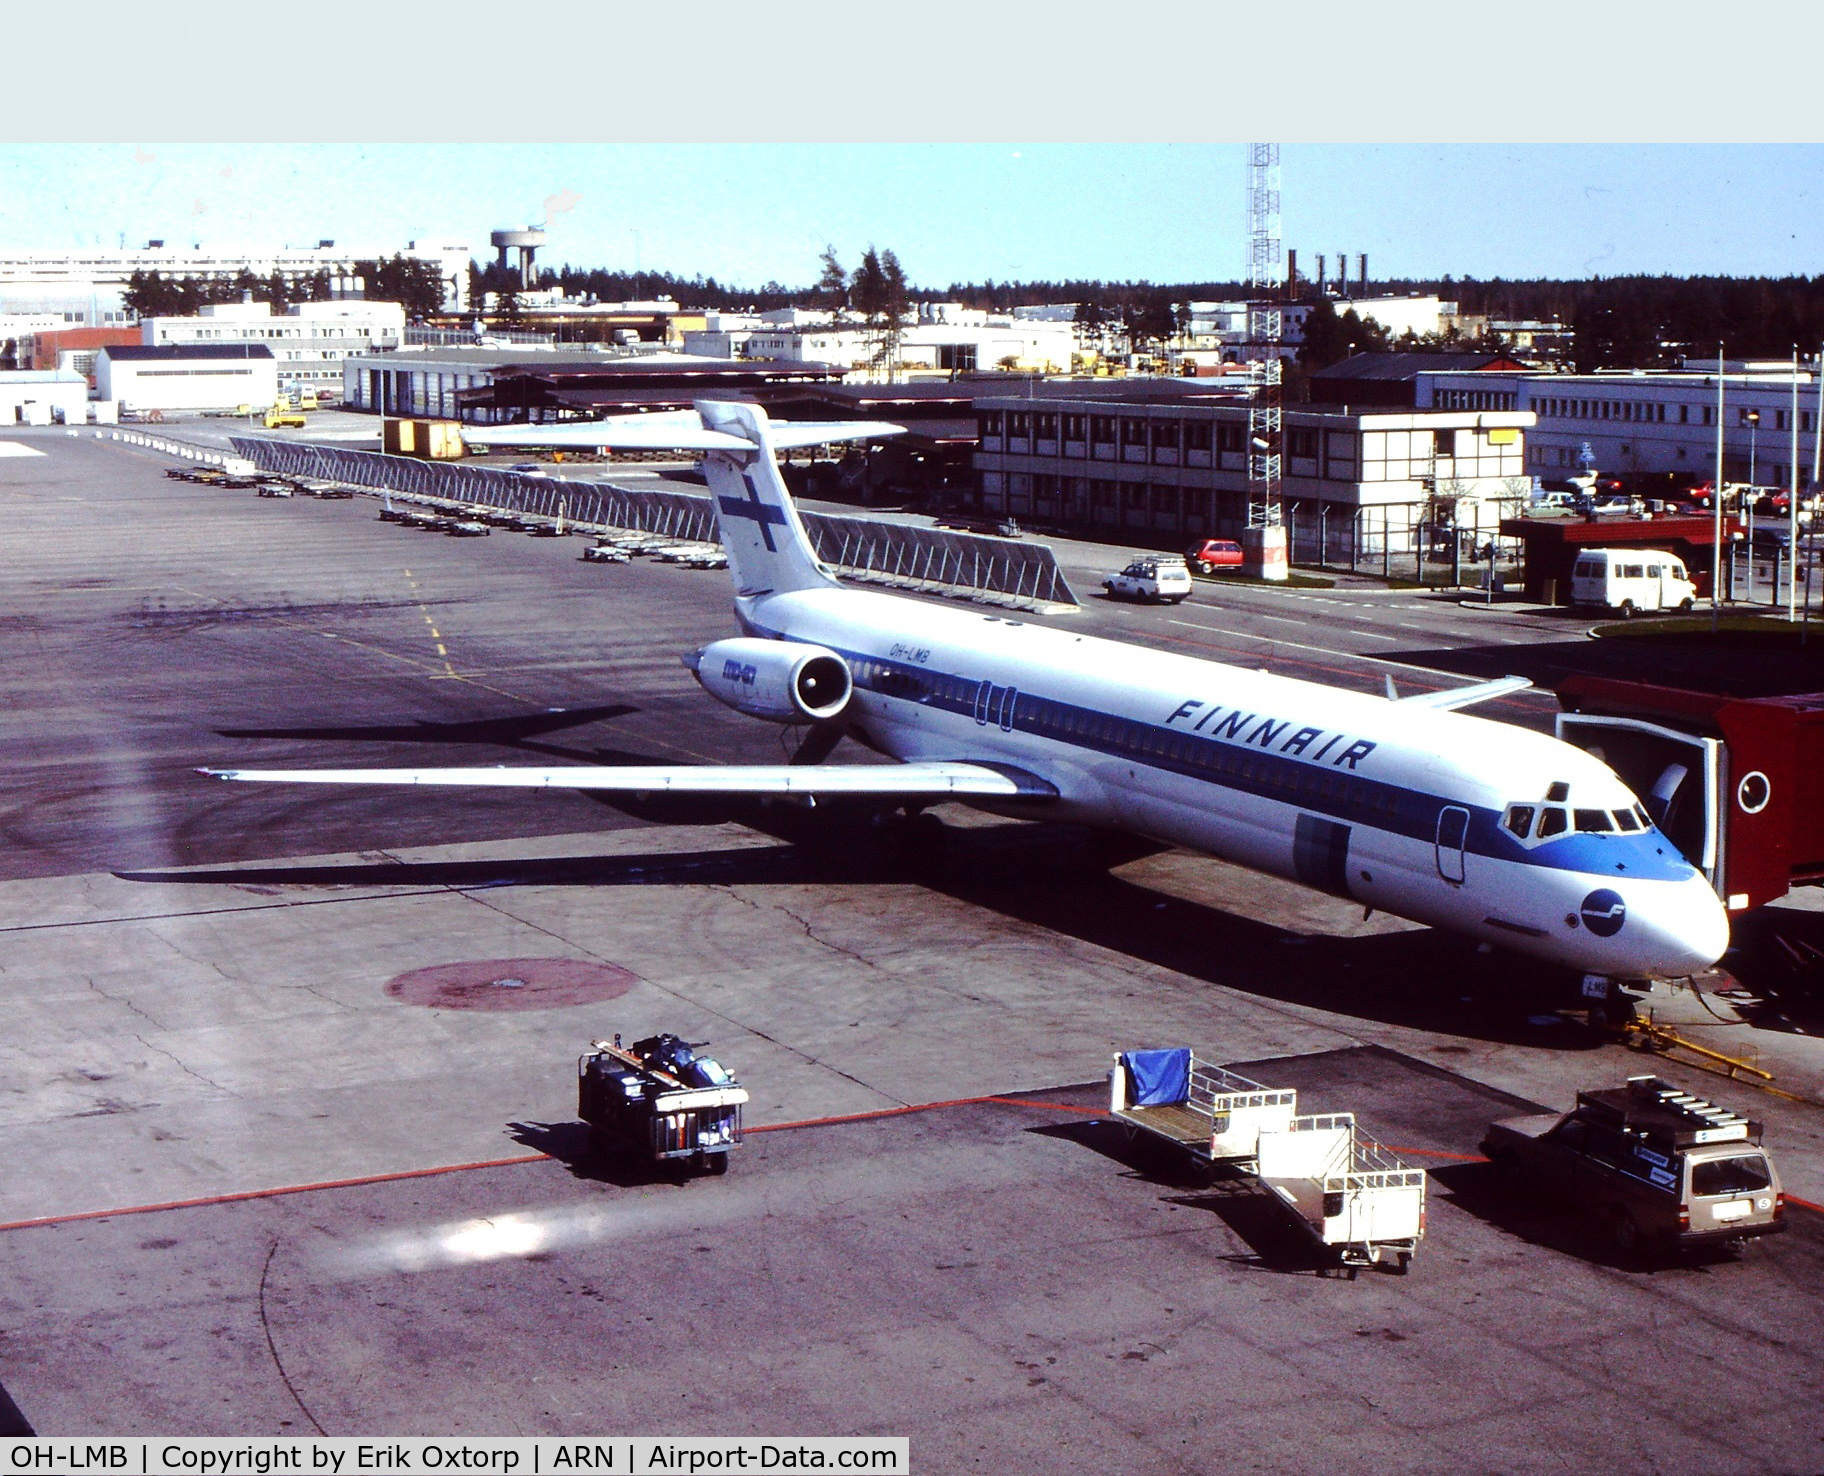 OH-LMB, 1987 McDonnell Douglas MD-87 (DC-9-87) C/N 49404, OH-LMB in ARN
Scanned slide